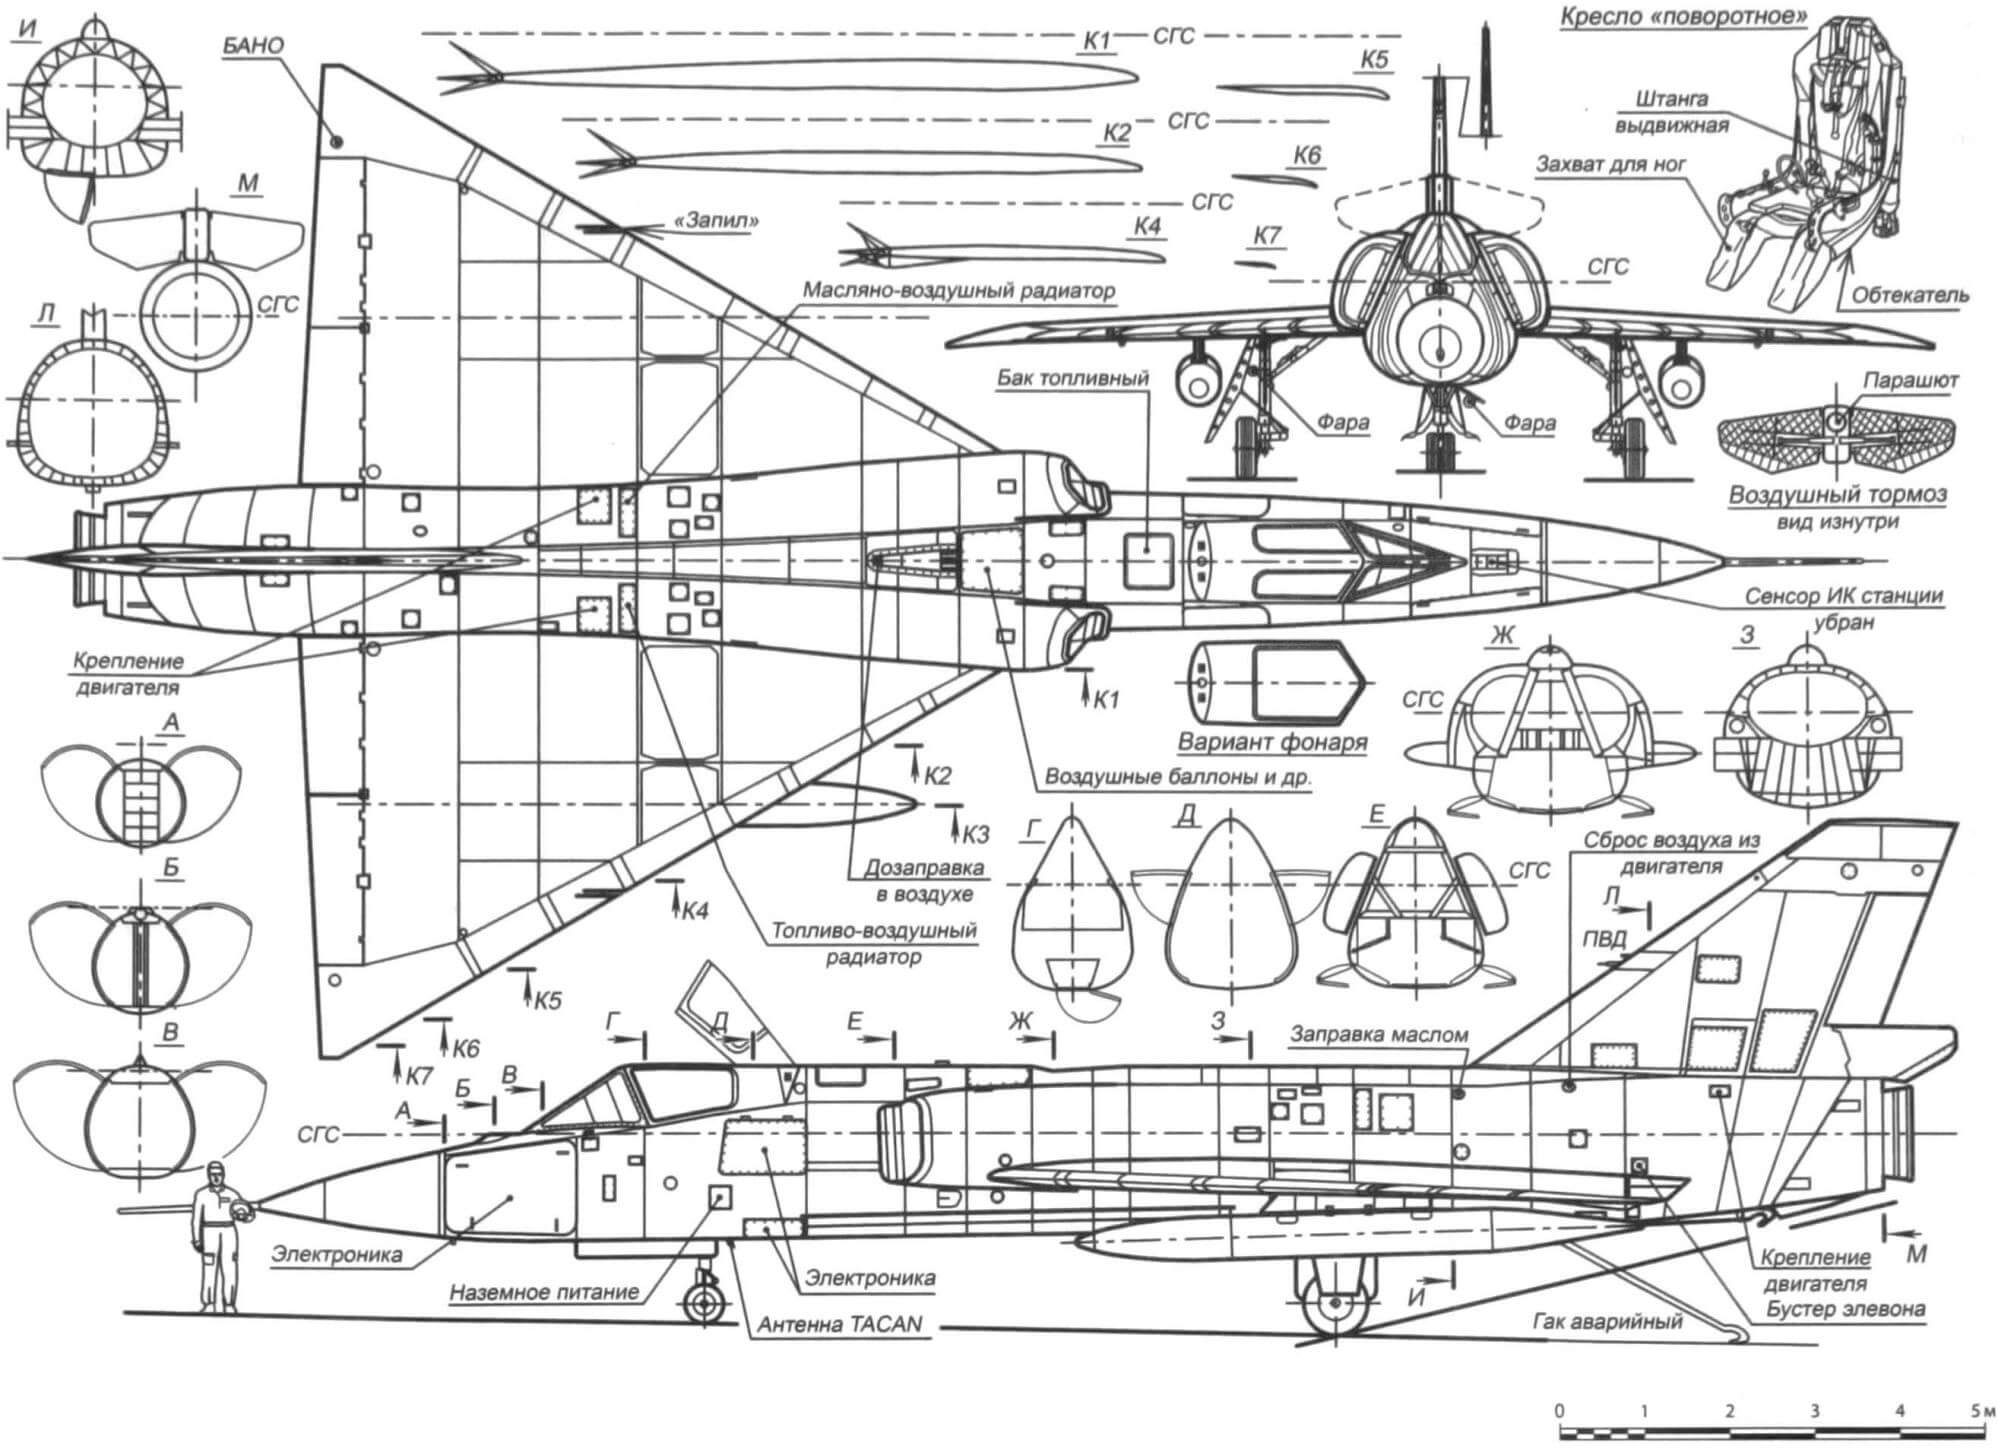 ПЕРЕХВАТЧИК F-106A «DELTA DART»